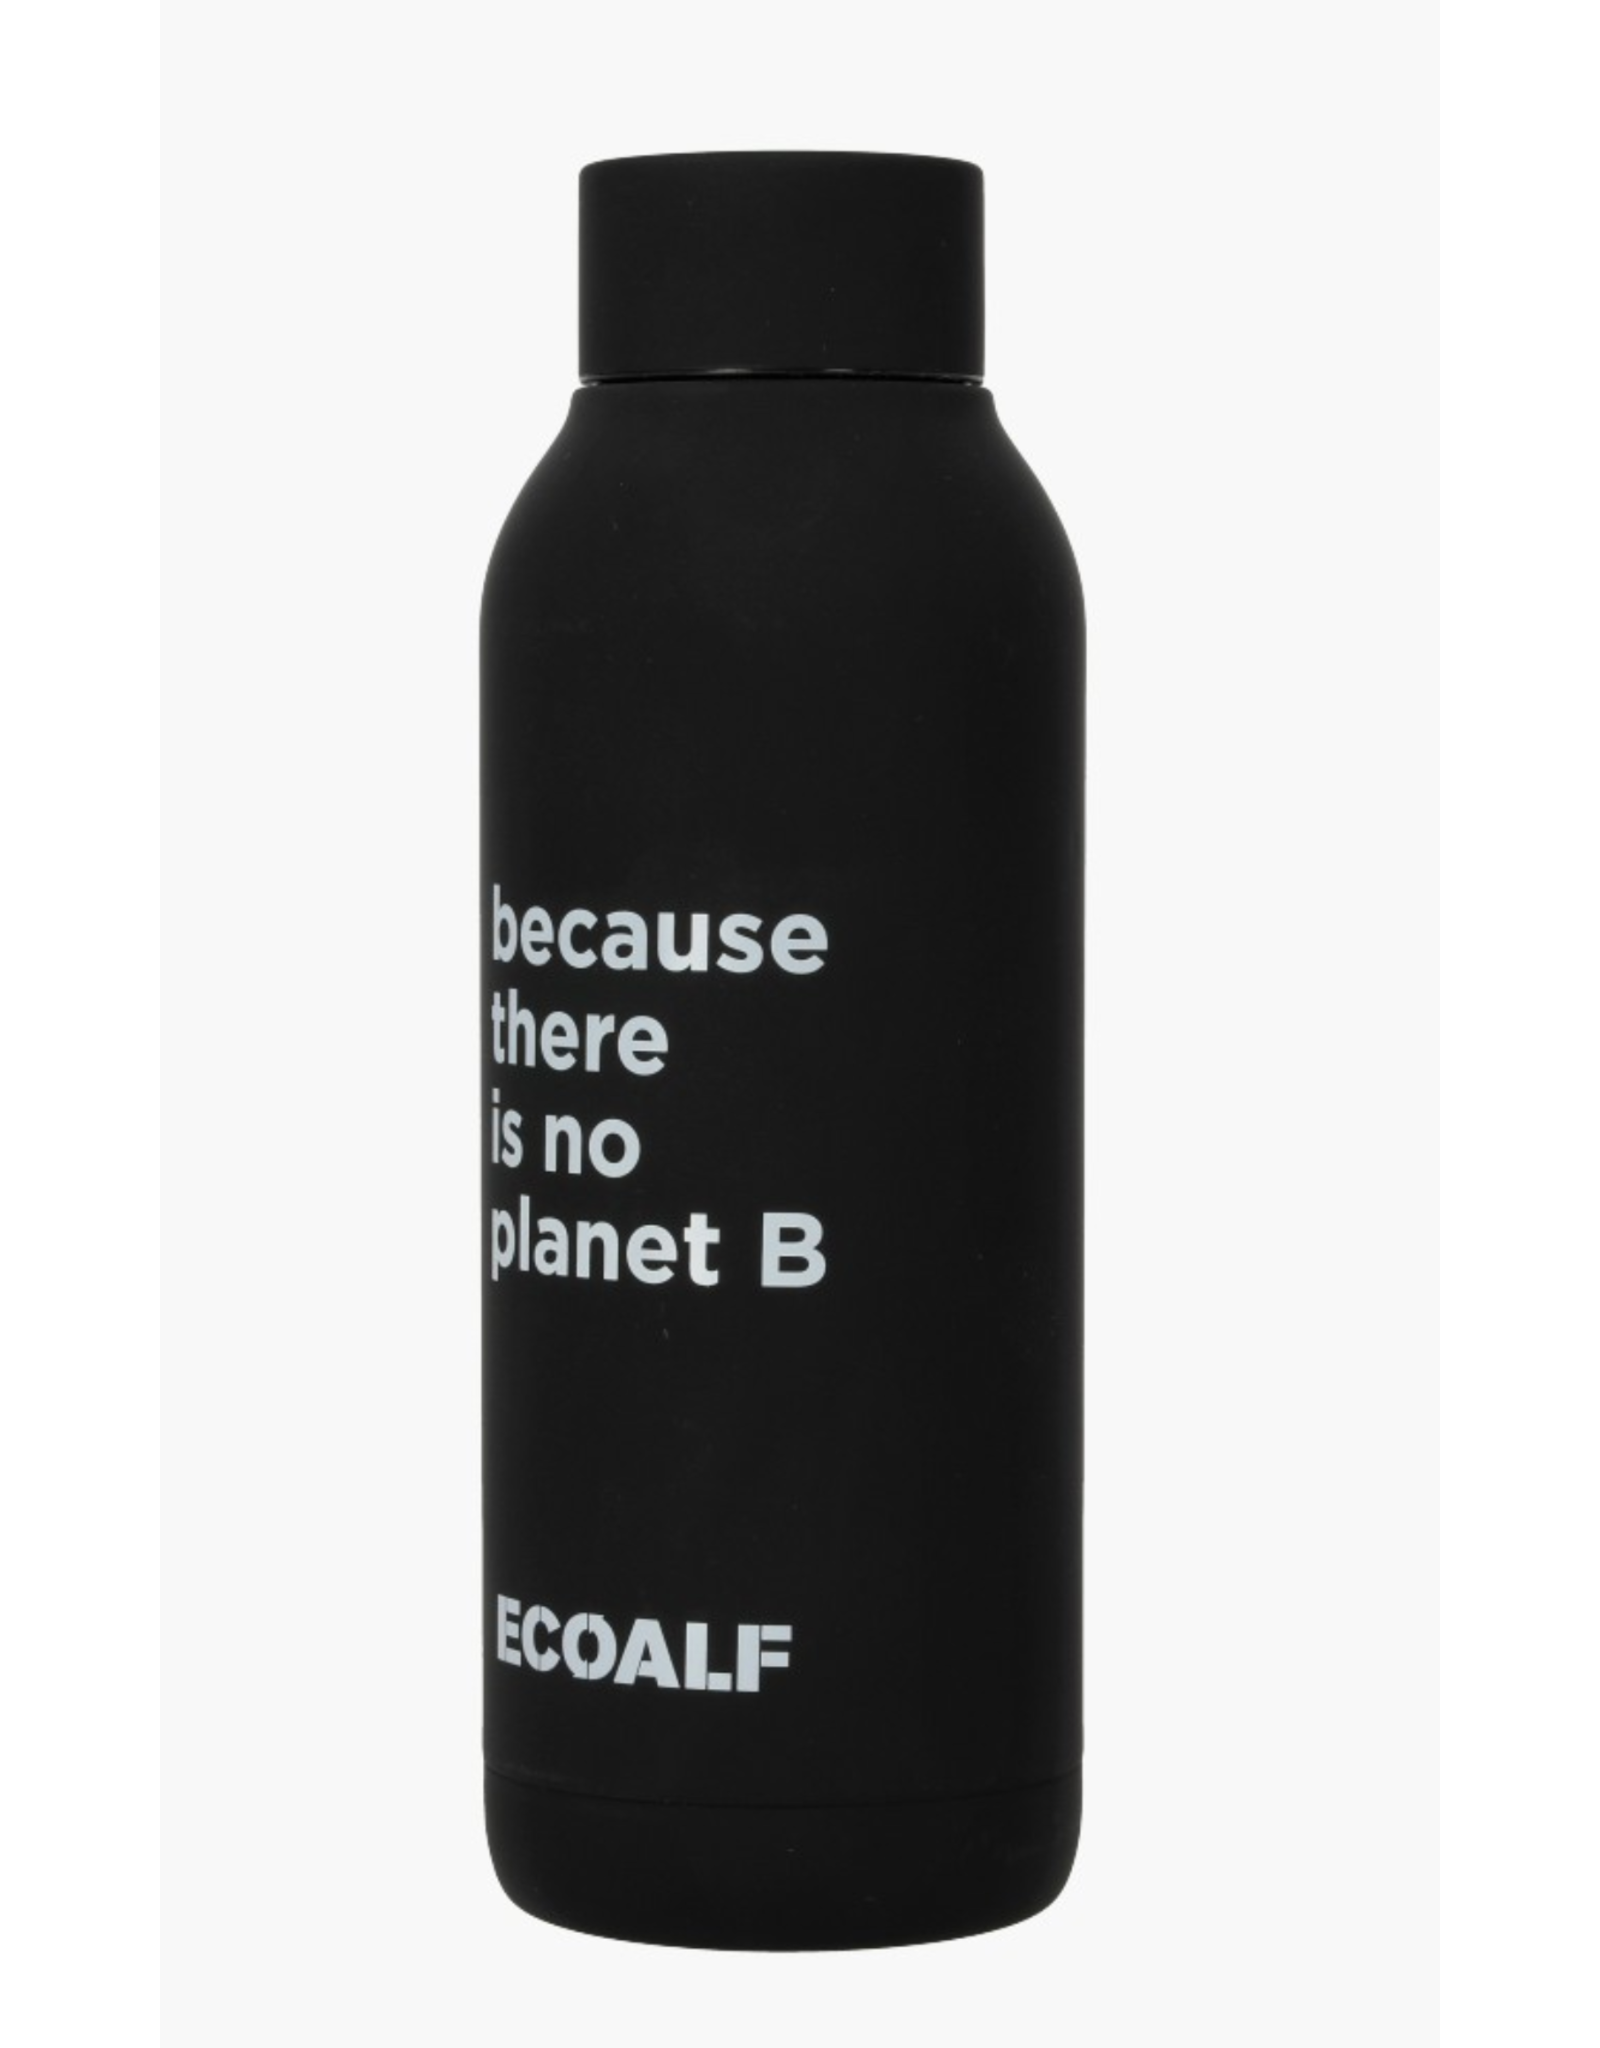 Ecoalf Bronson Stainless Steele Bottle